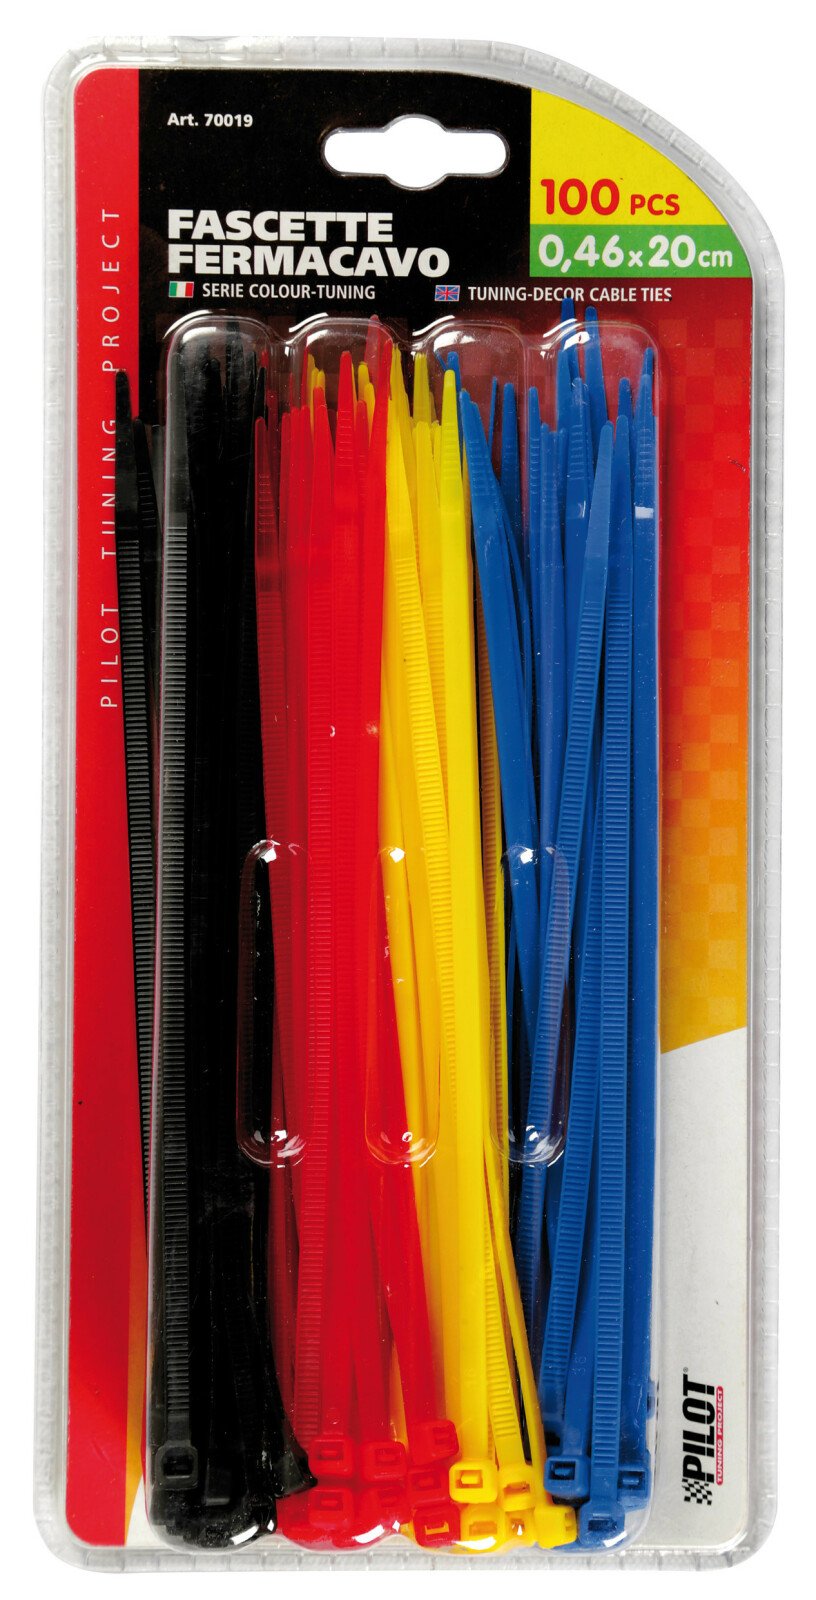 Tuning-Decor cable ties - 0,46x20 cm thumb